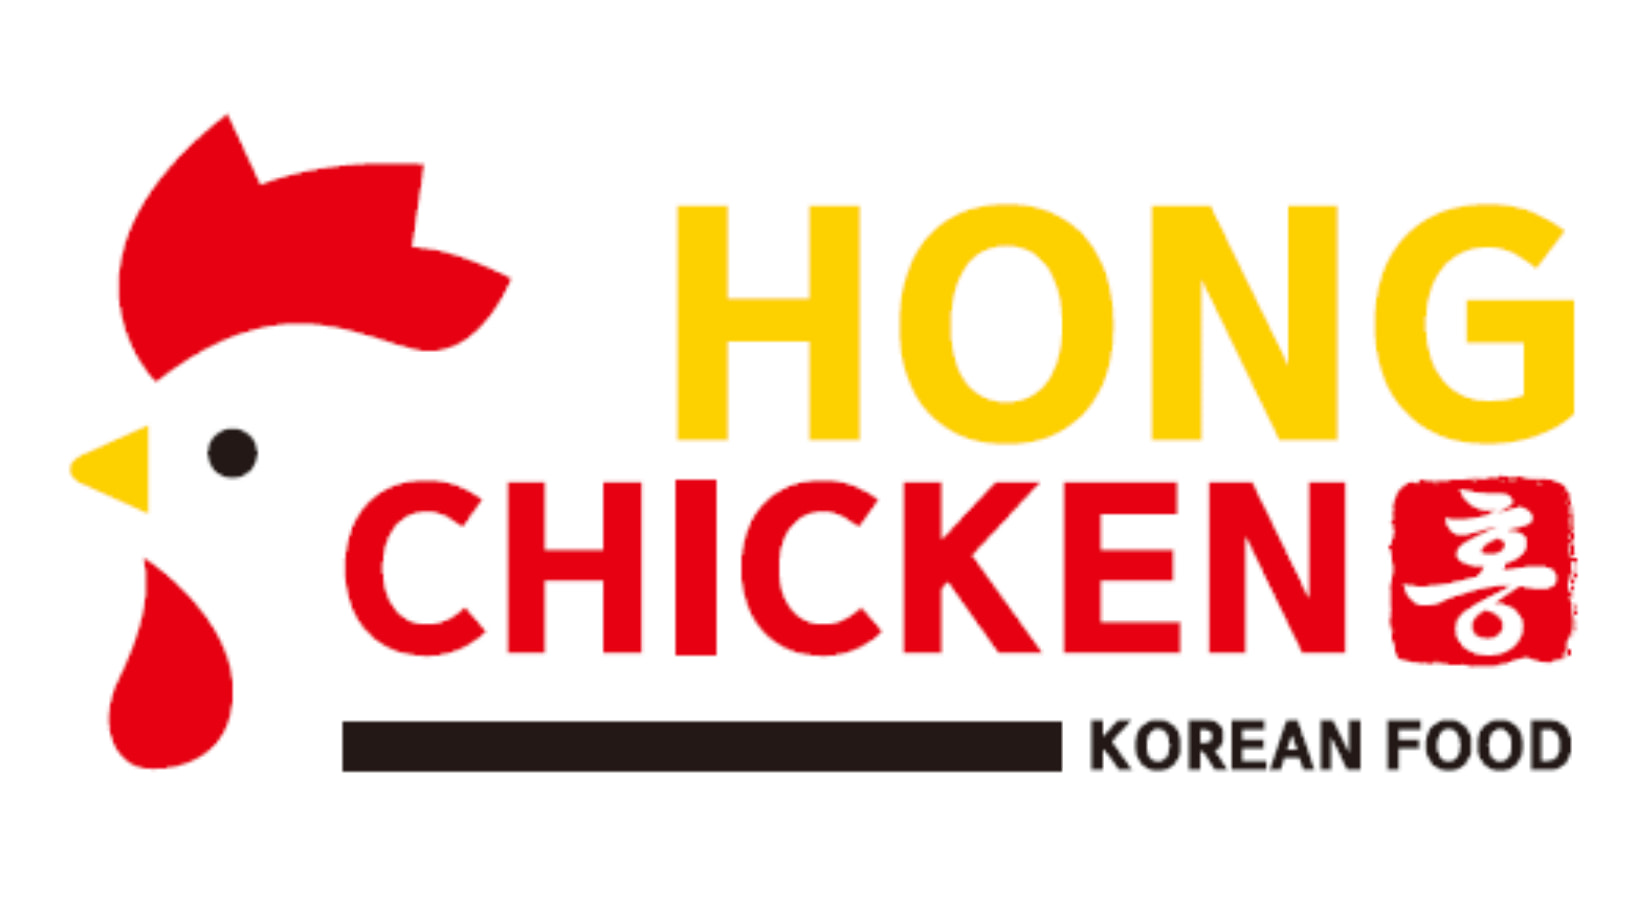 HongKoreanChicken14.jpg